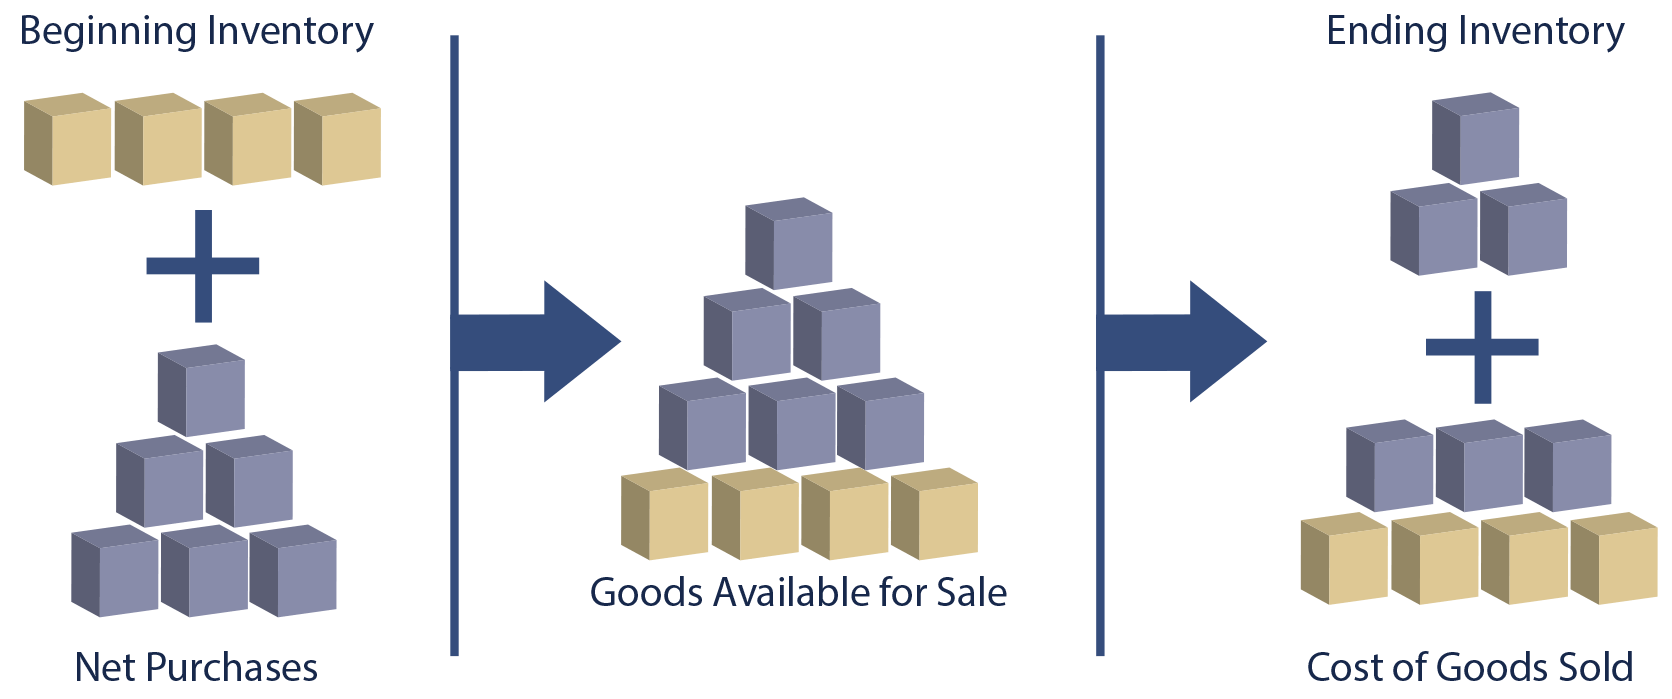 Cost of Goods Sold diagram